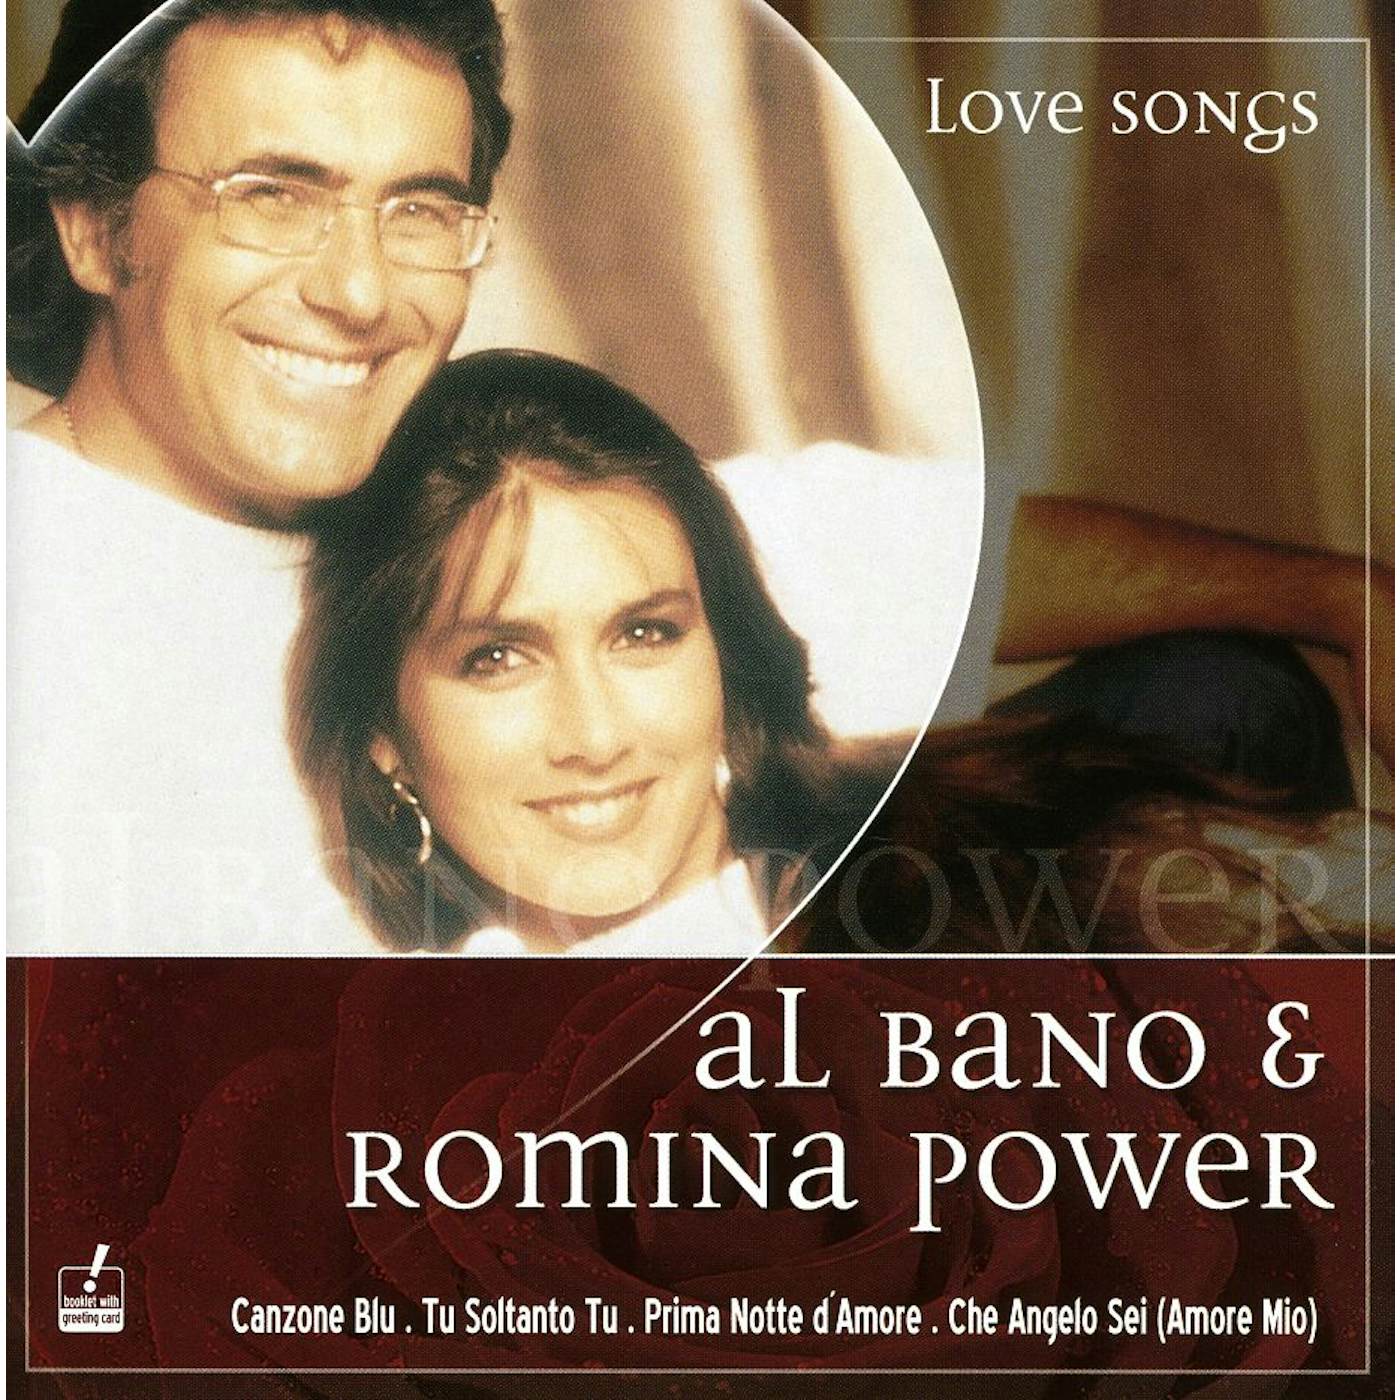 Al Bano And Romina Power LOVE SONGS CD